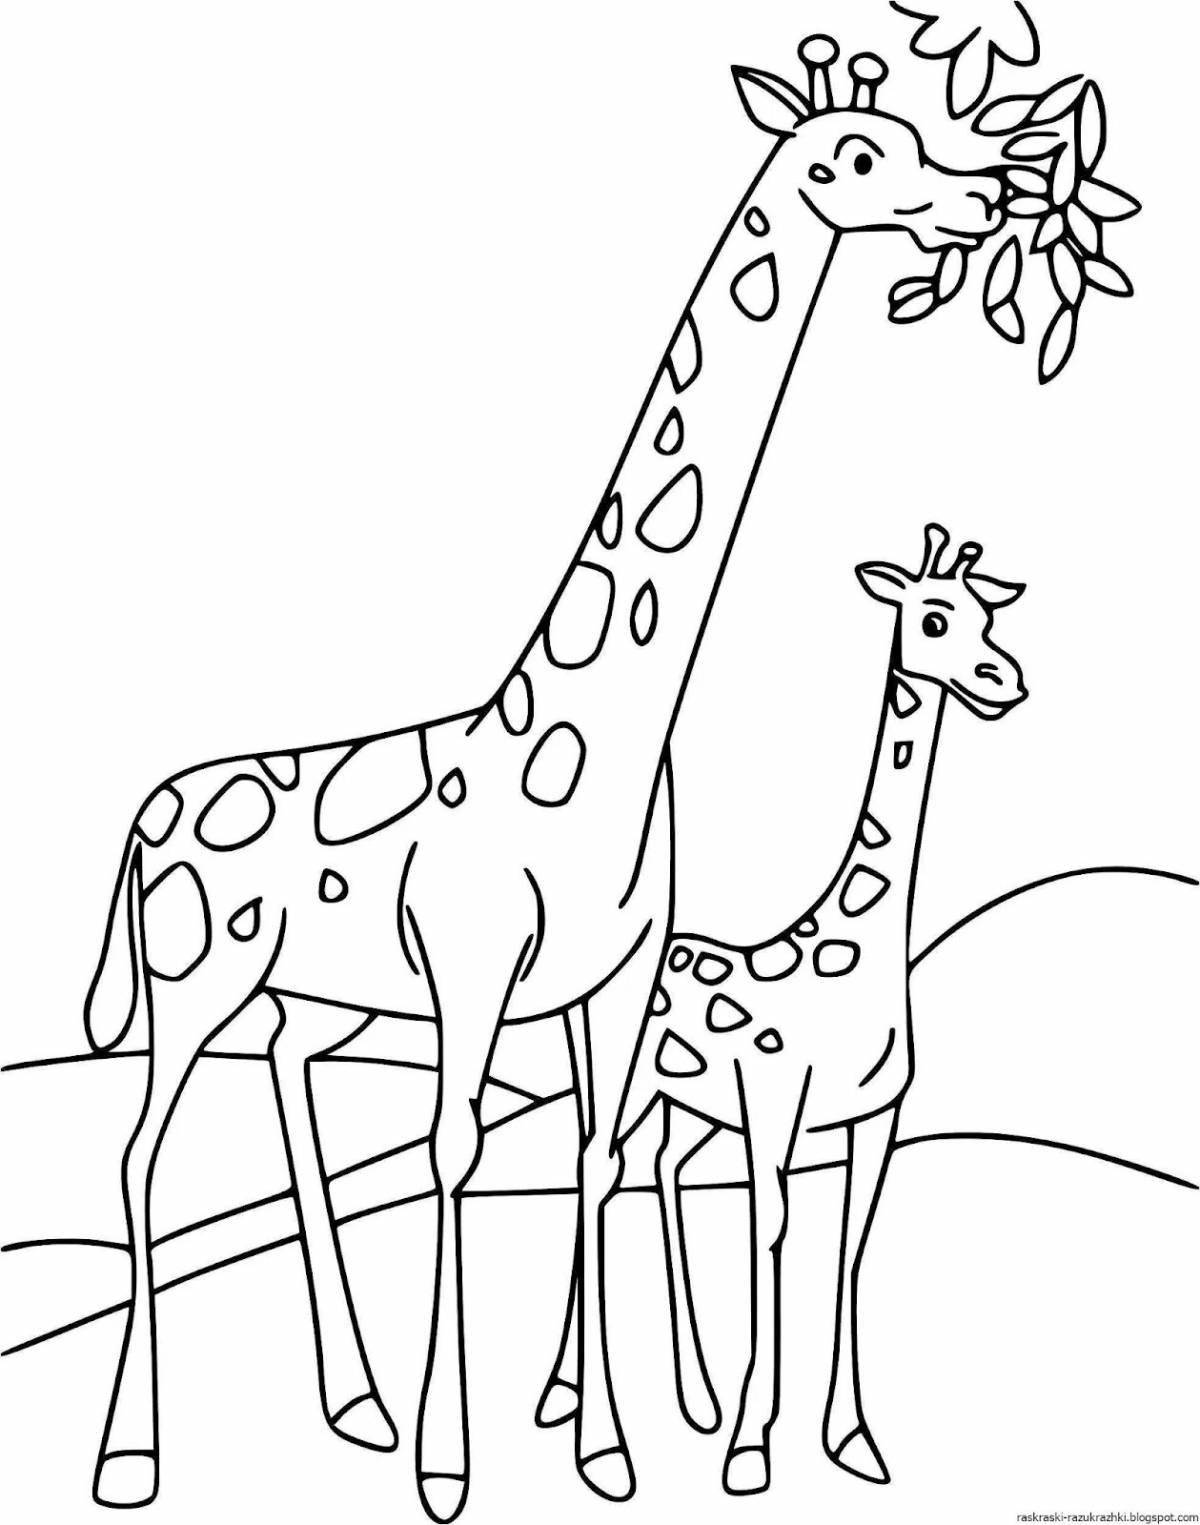 Witty giraffe coloring